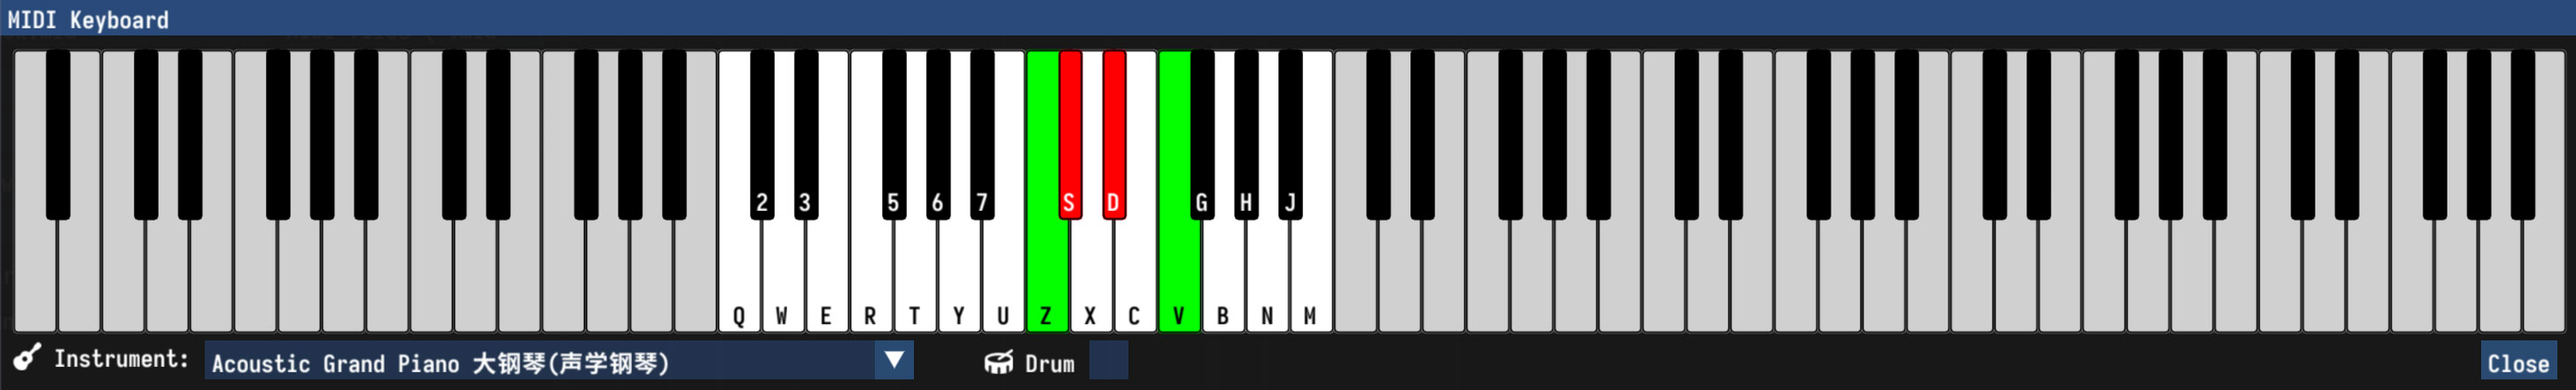 midi keyboard Image